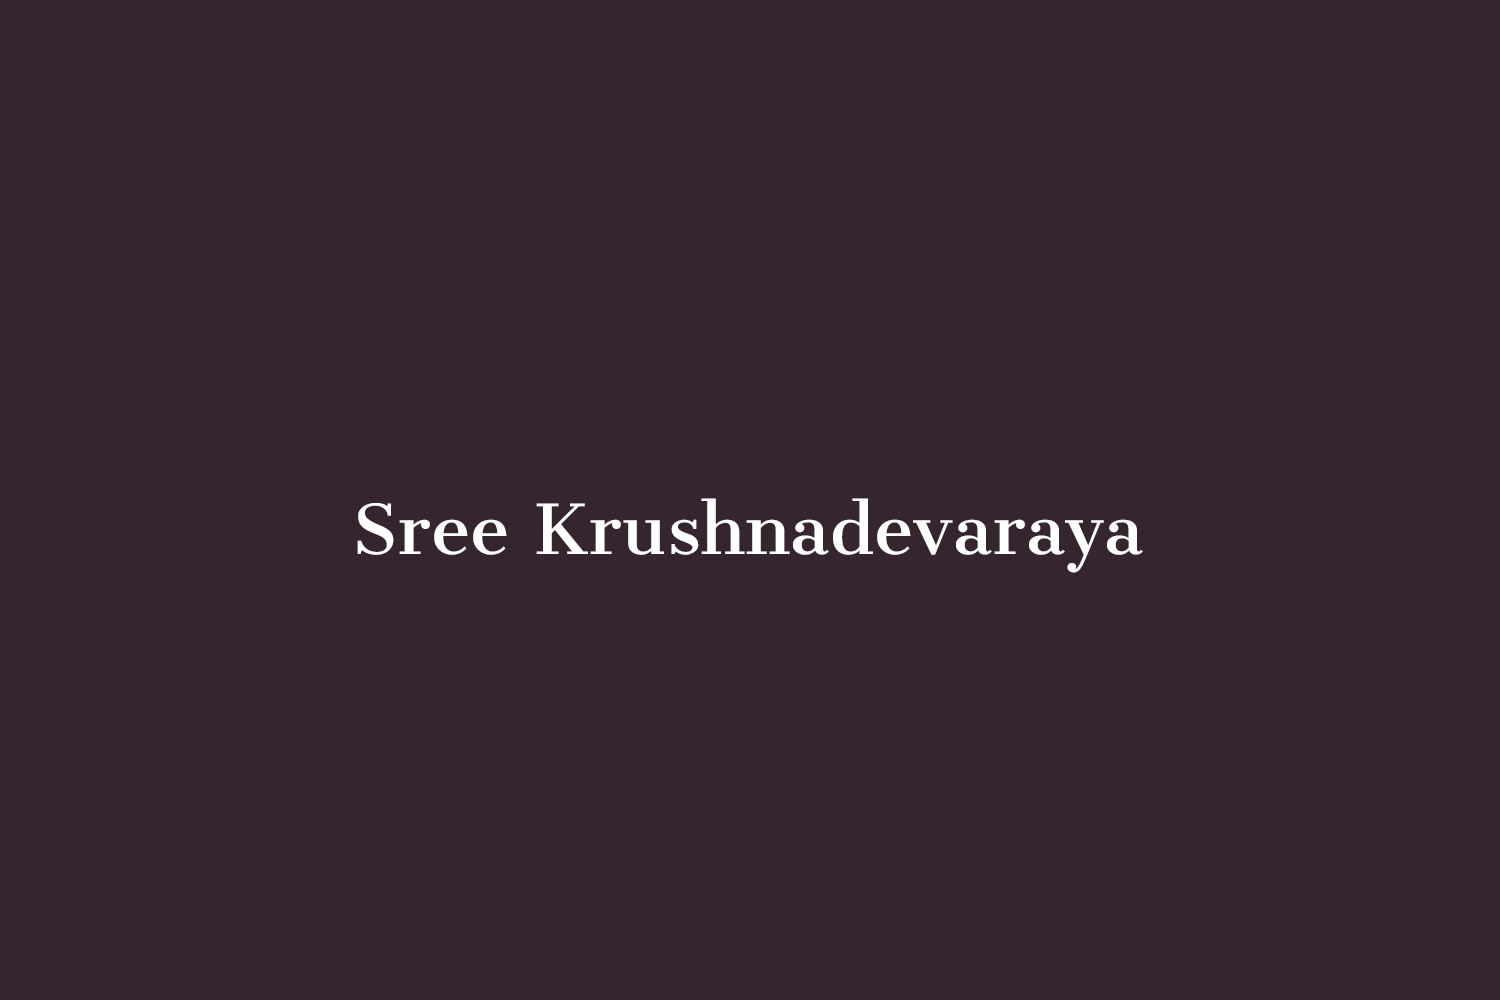 Sree Krushnadevaraya